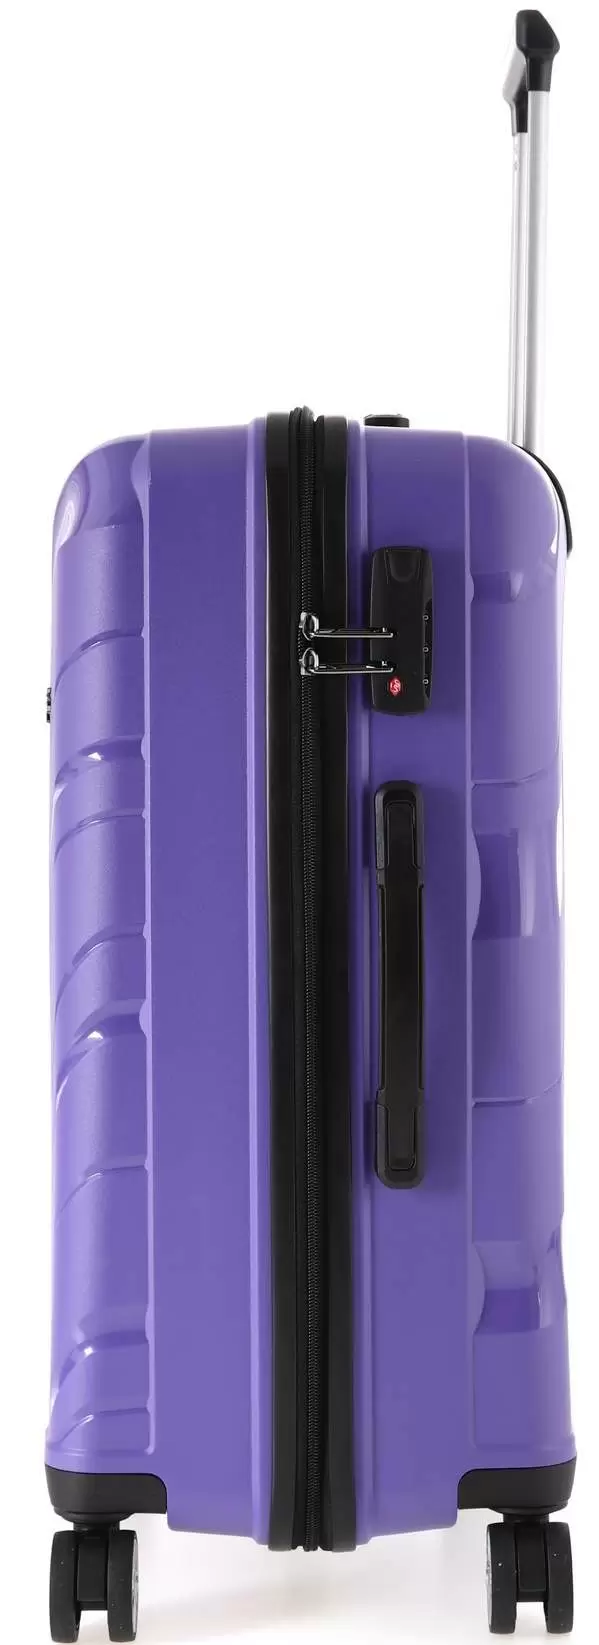 Valiză CCS 5223 S, violet